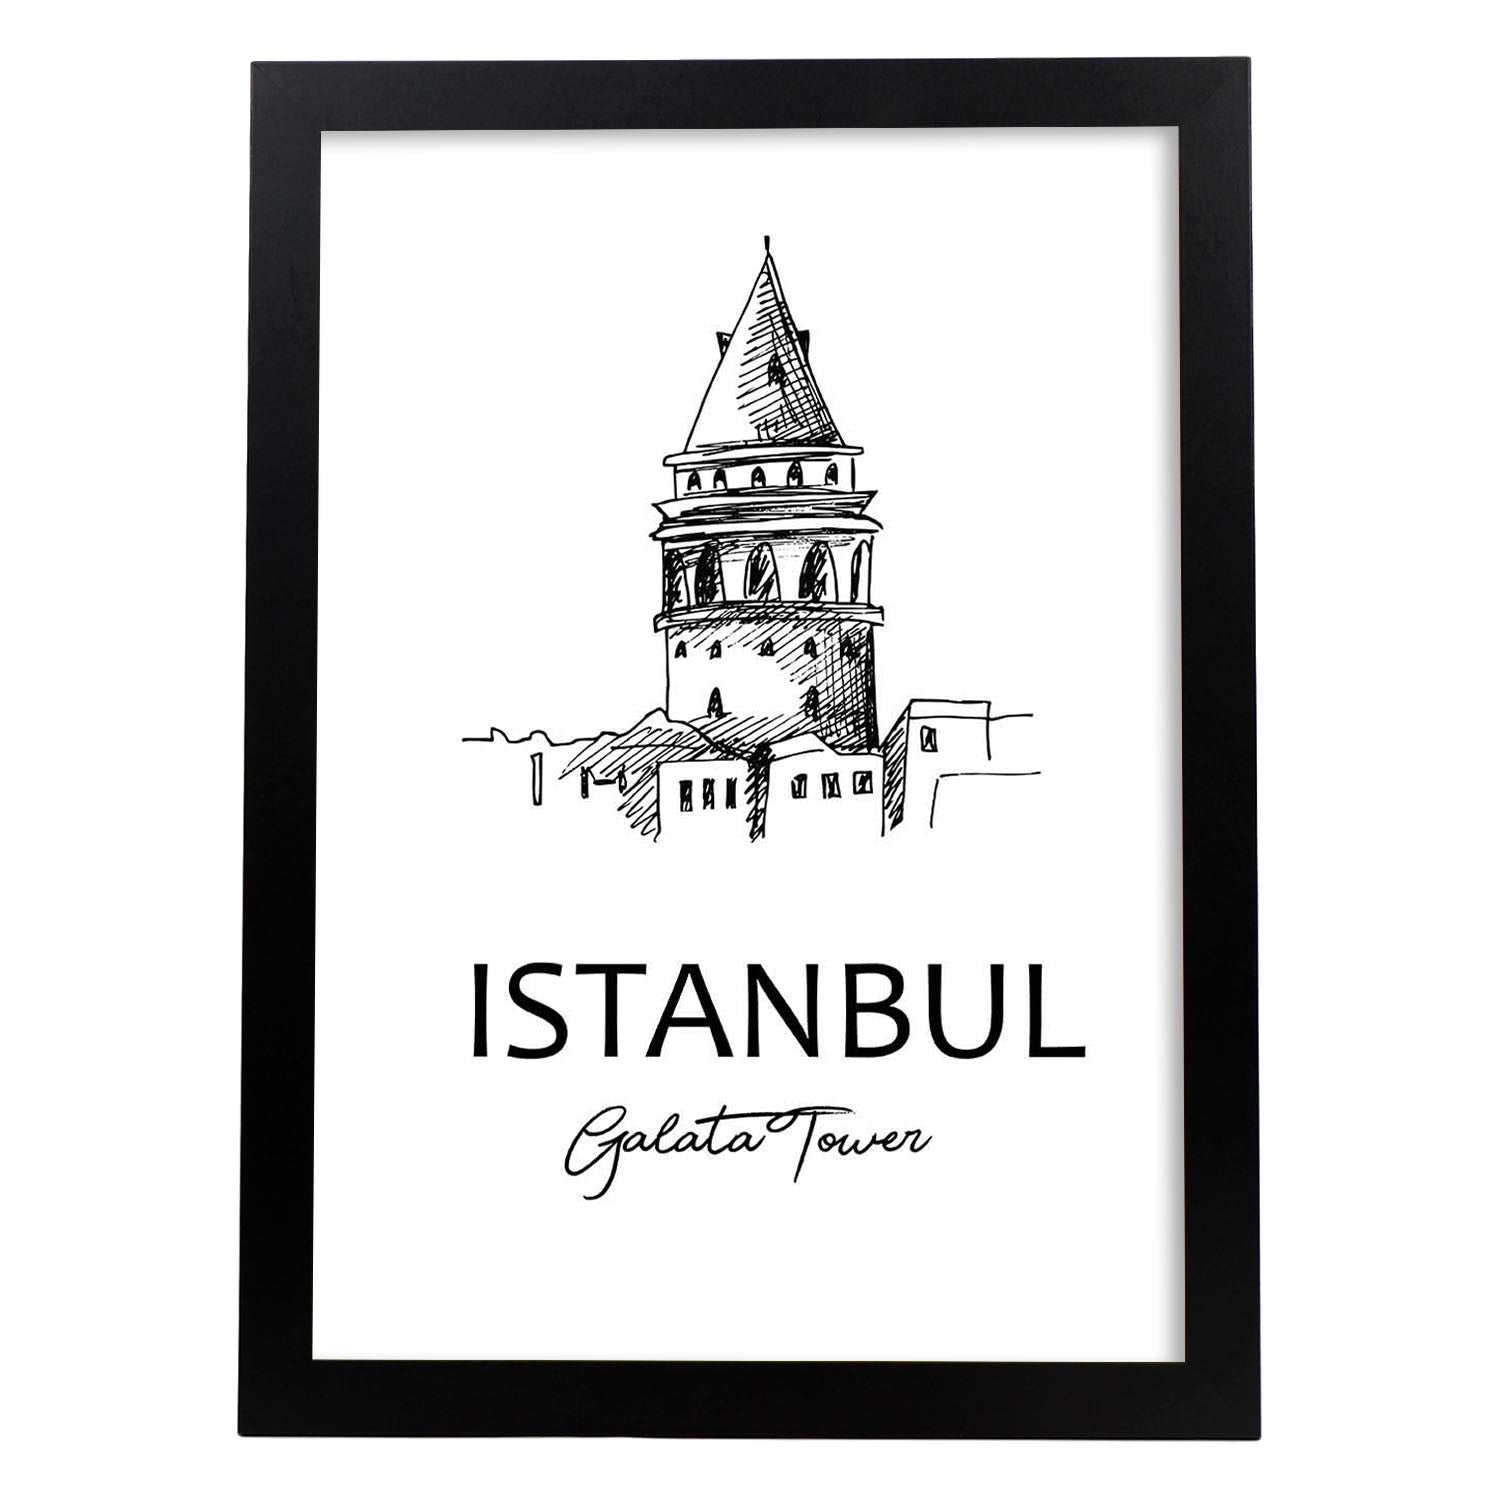 Poster de Estambul - Torre galata. Láminas con monumentos de ciudades.-Artwork-Nacnic-A4-Marco Negro-Nacnic Estudio SL